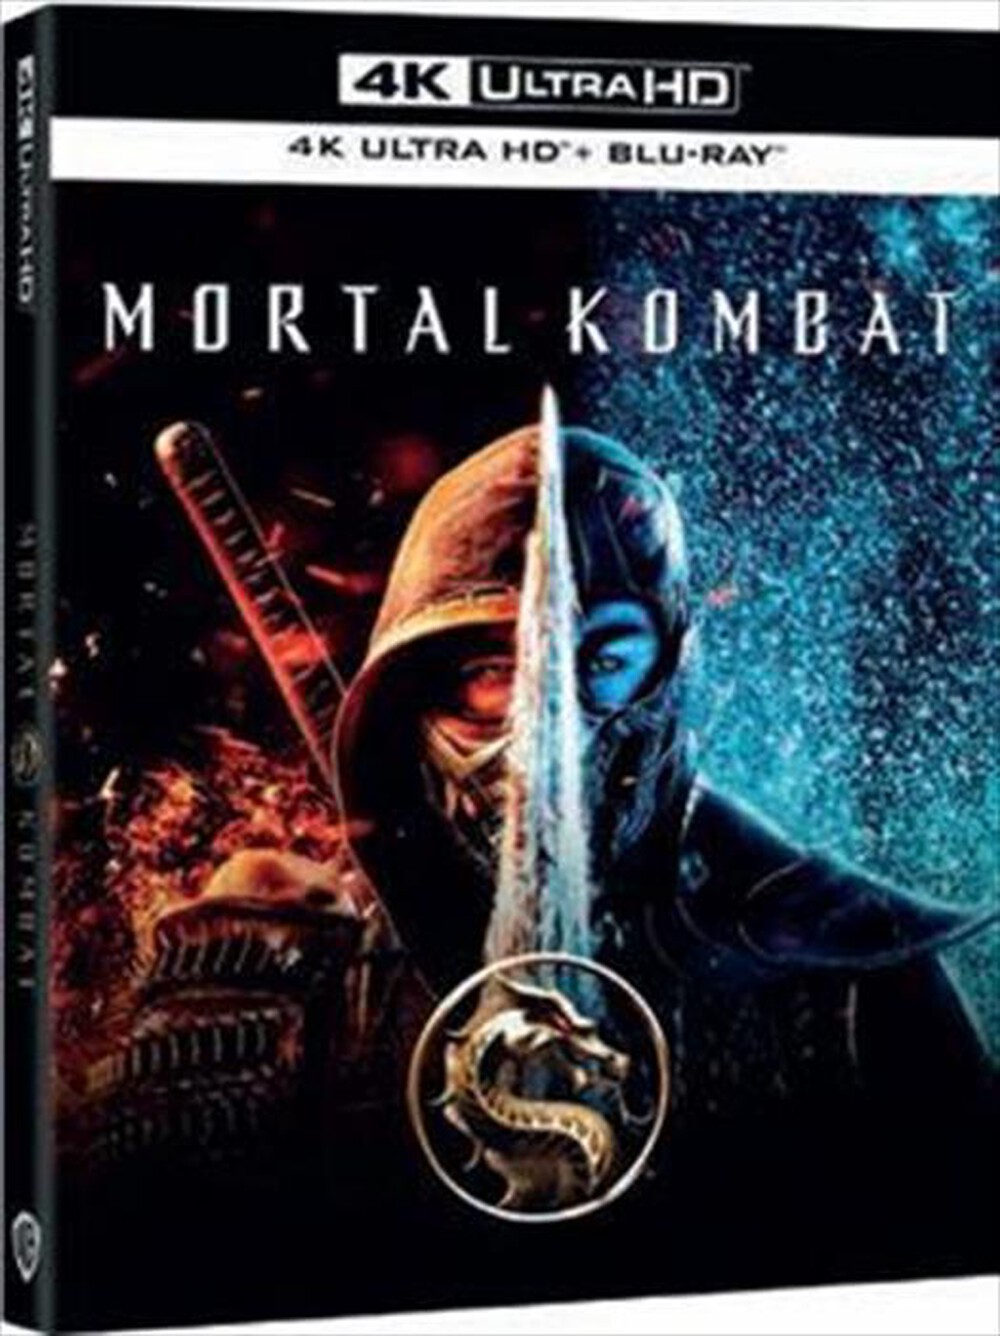 "WARNER HOME VIDEO - Mortal Kombat (4K Ultra Hd+Blu Ray)"